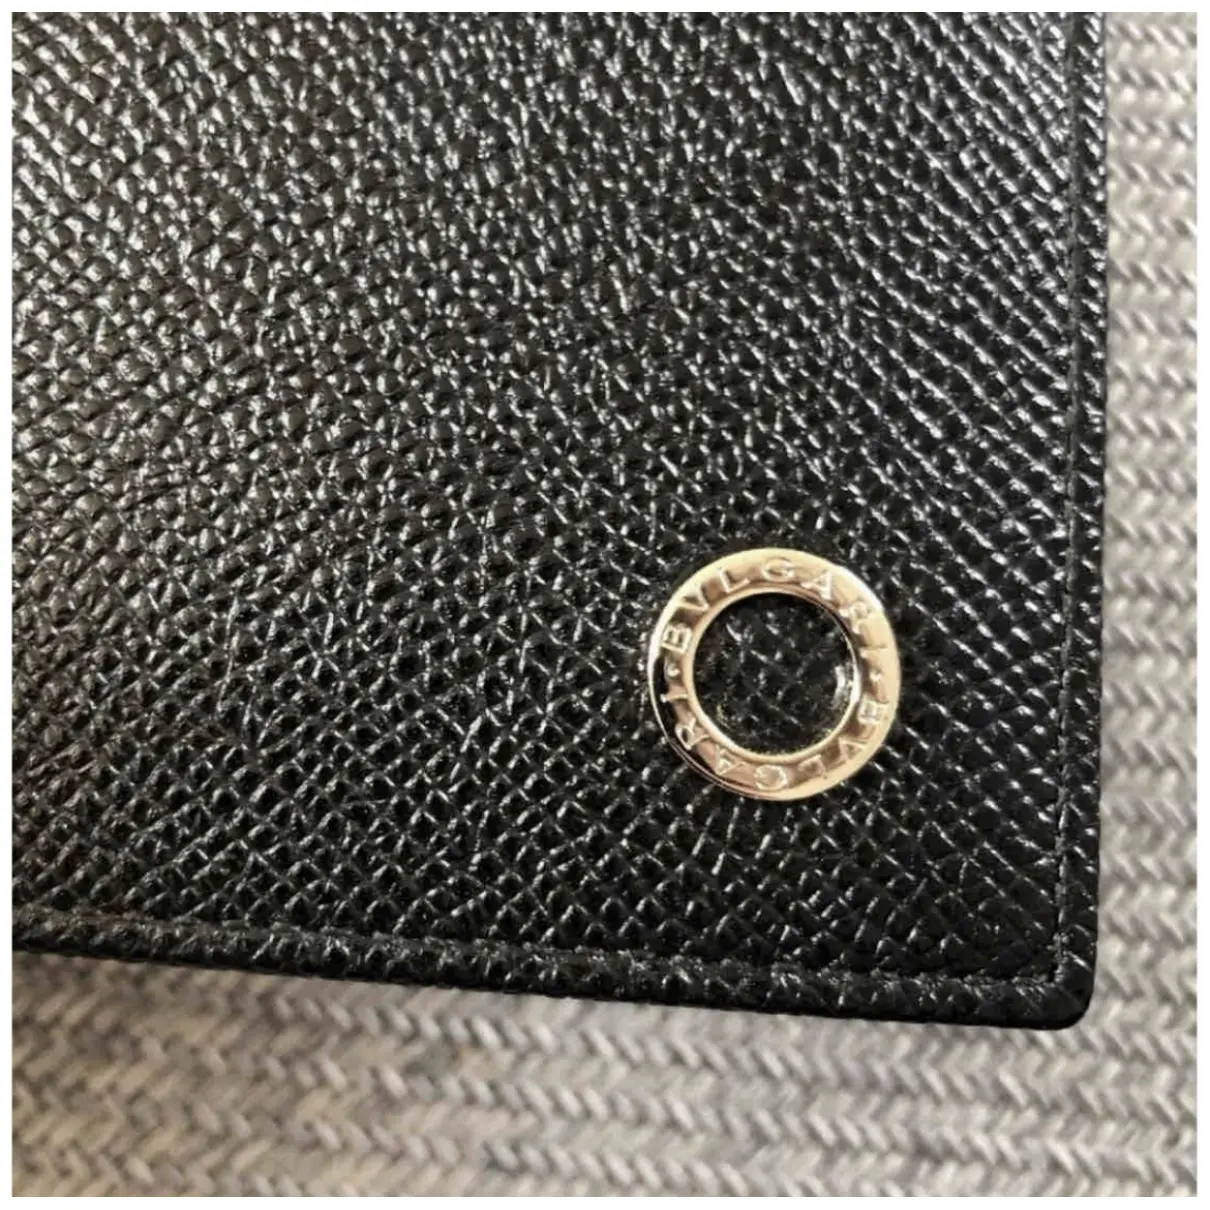 Buy Bvlgari Leather small bag online